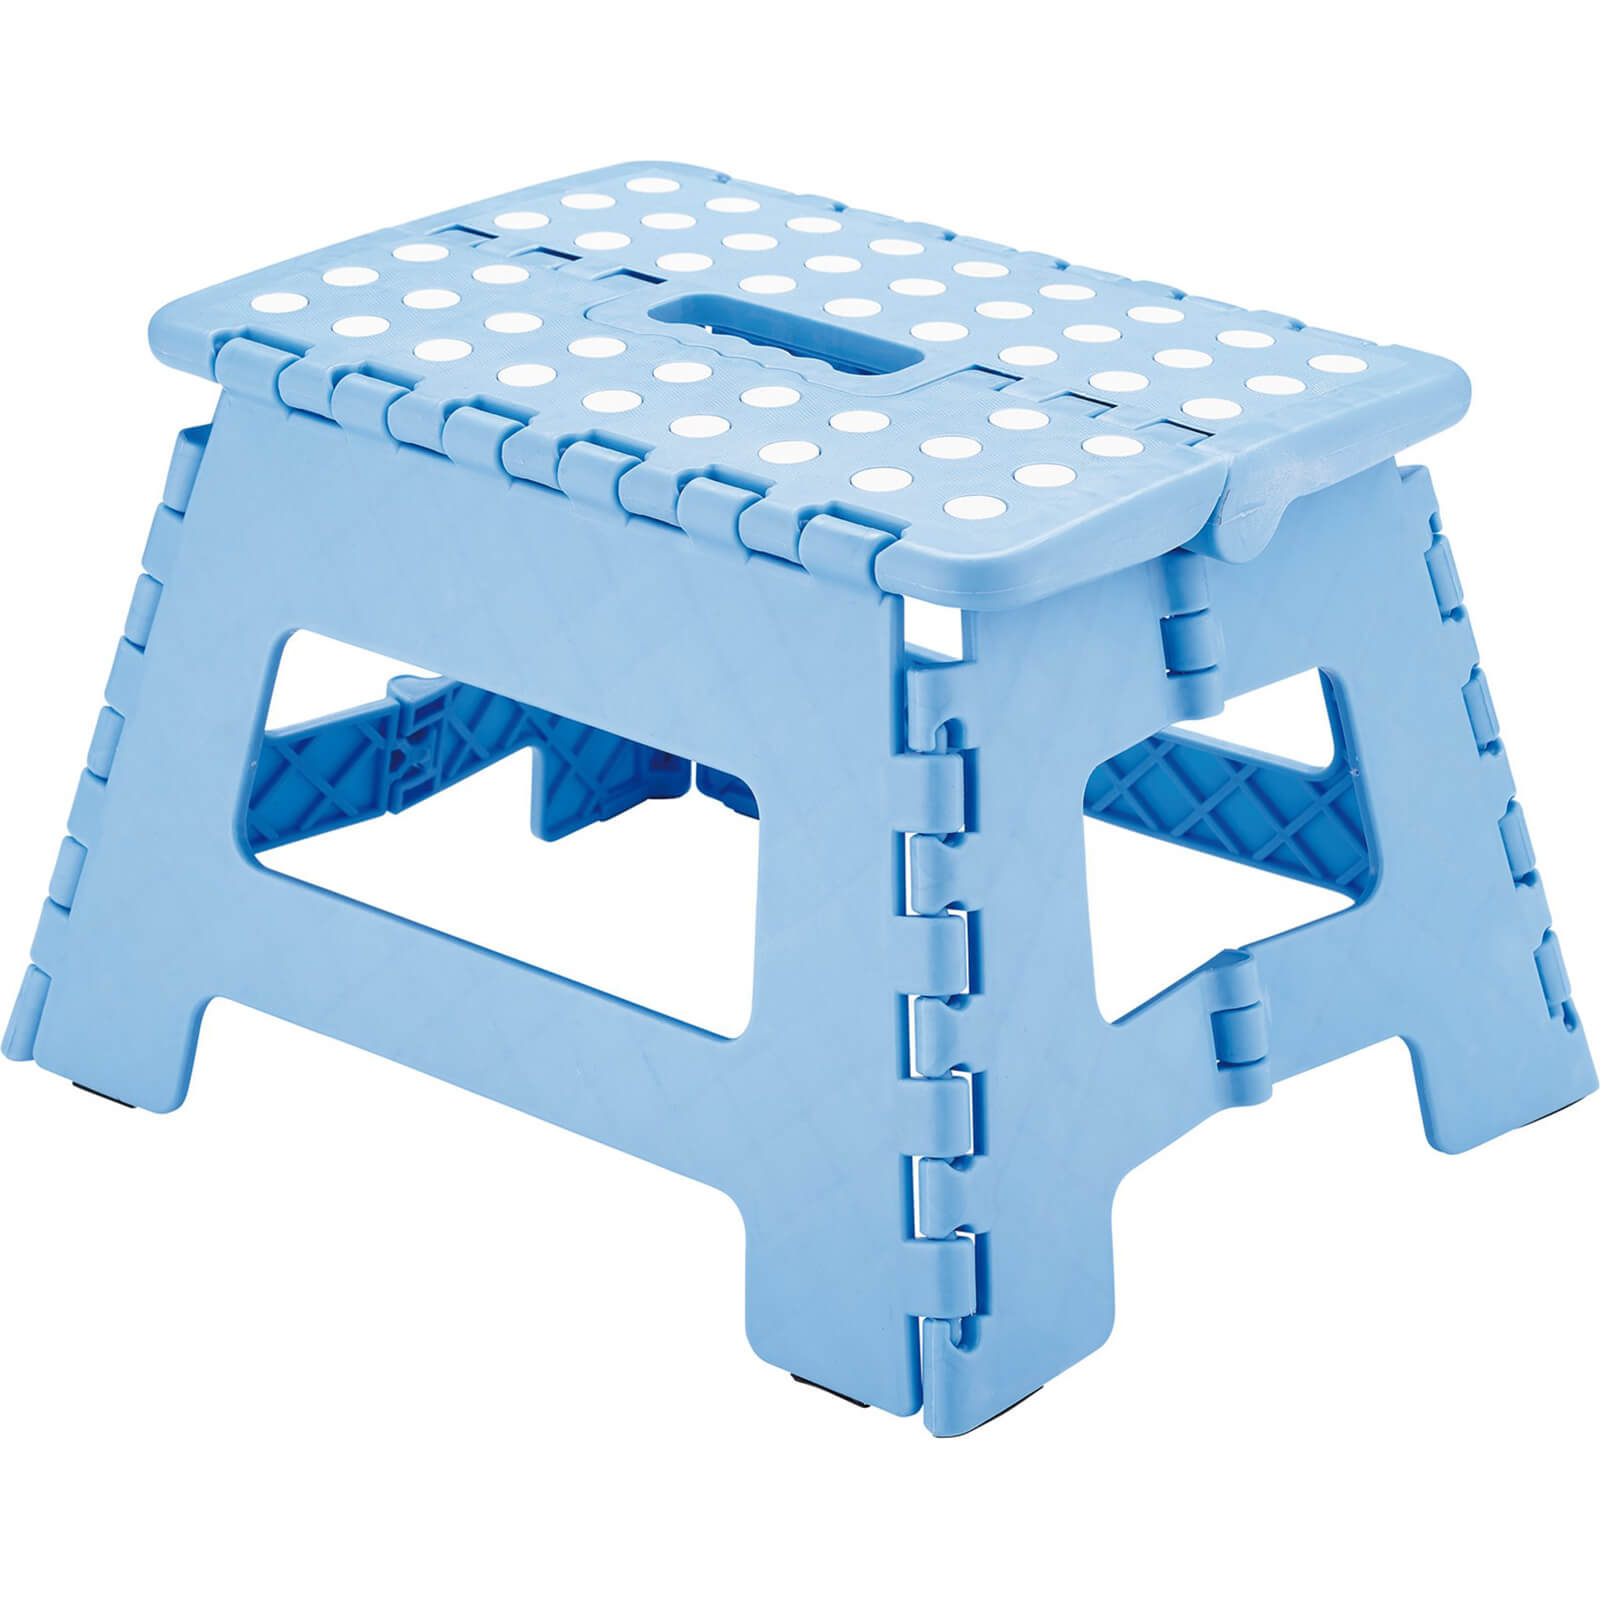 Image of Draper Plastic Folding Step Stool